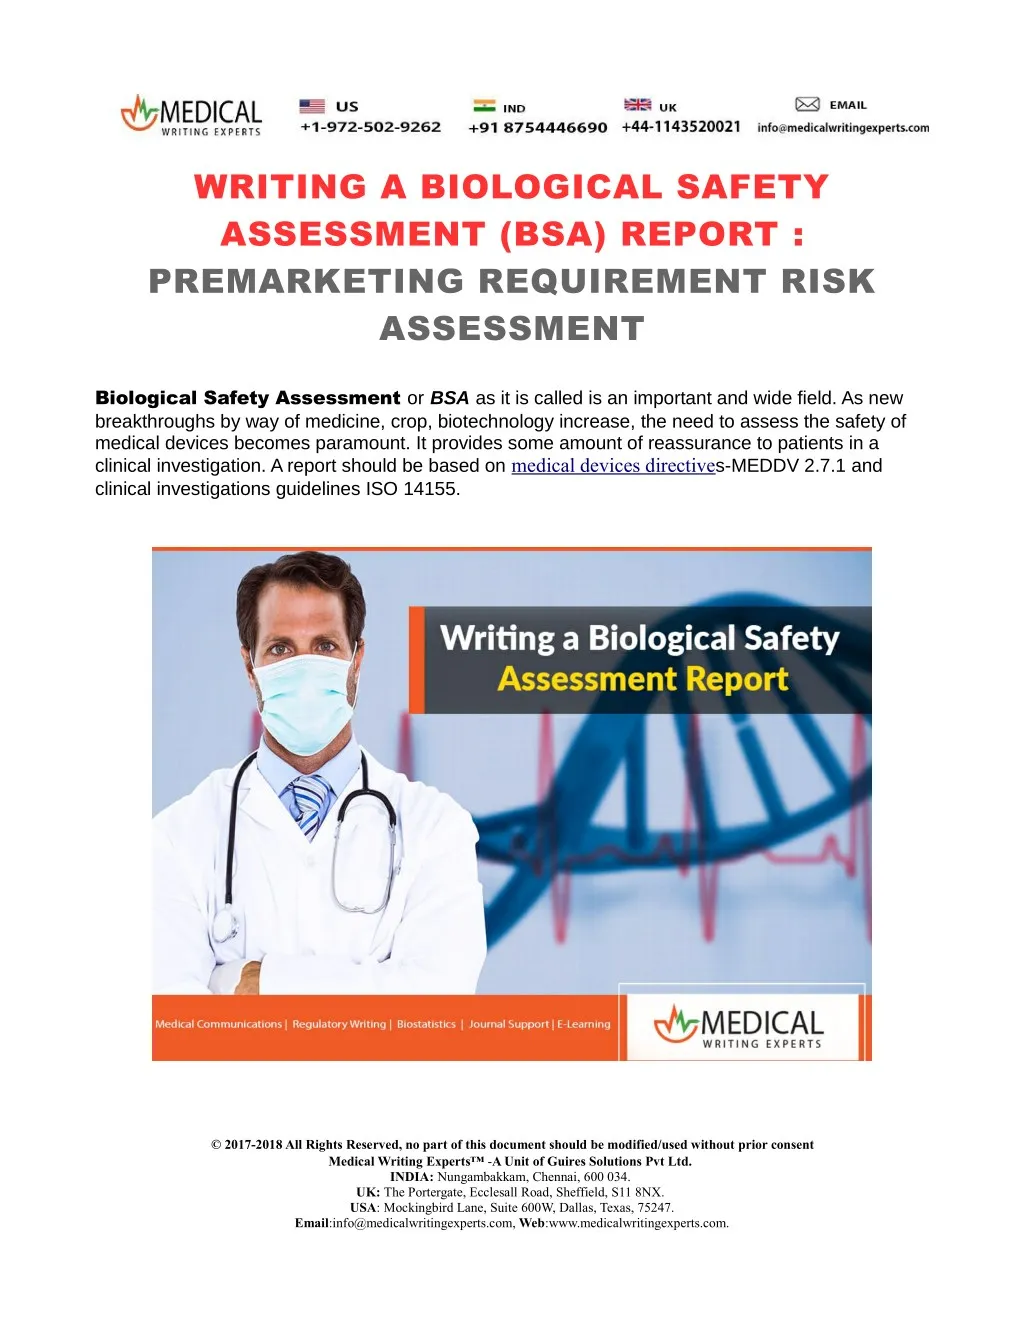 writing a biological safety assessment bsa report